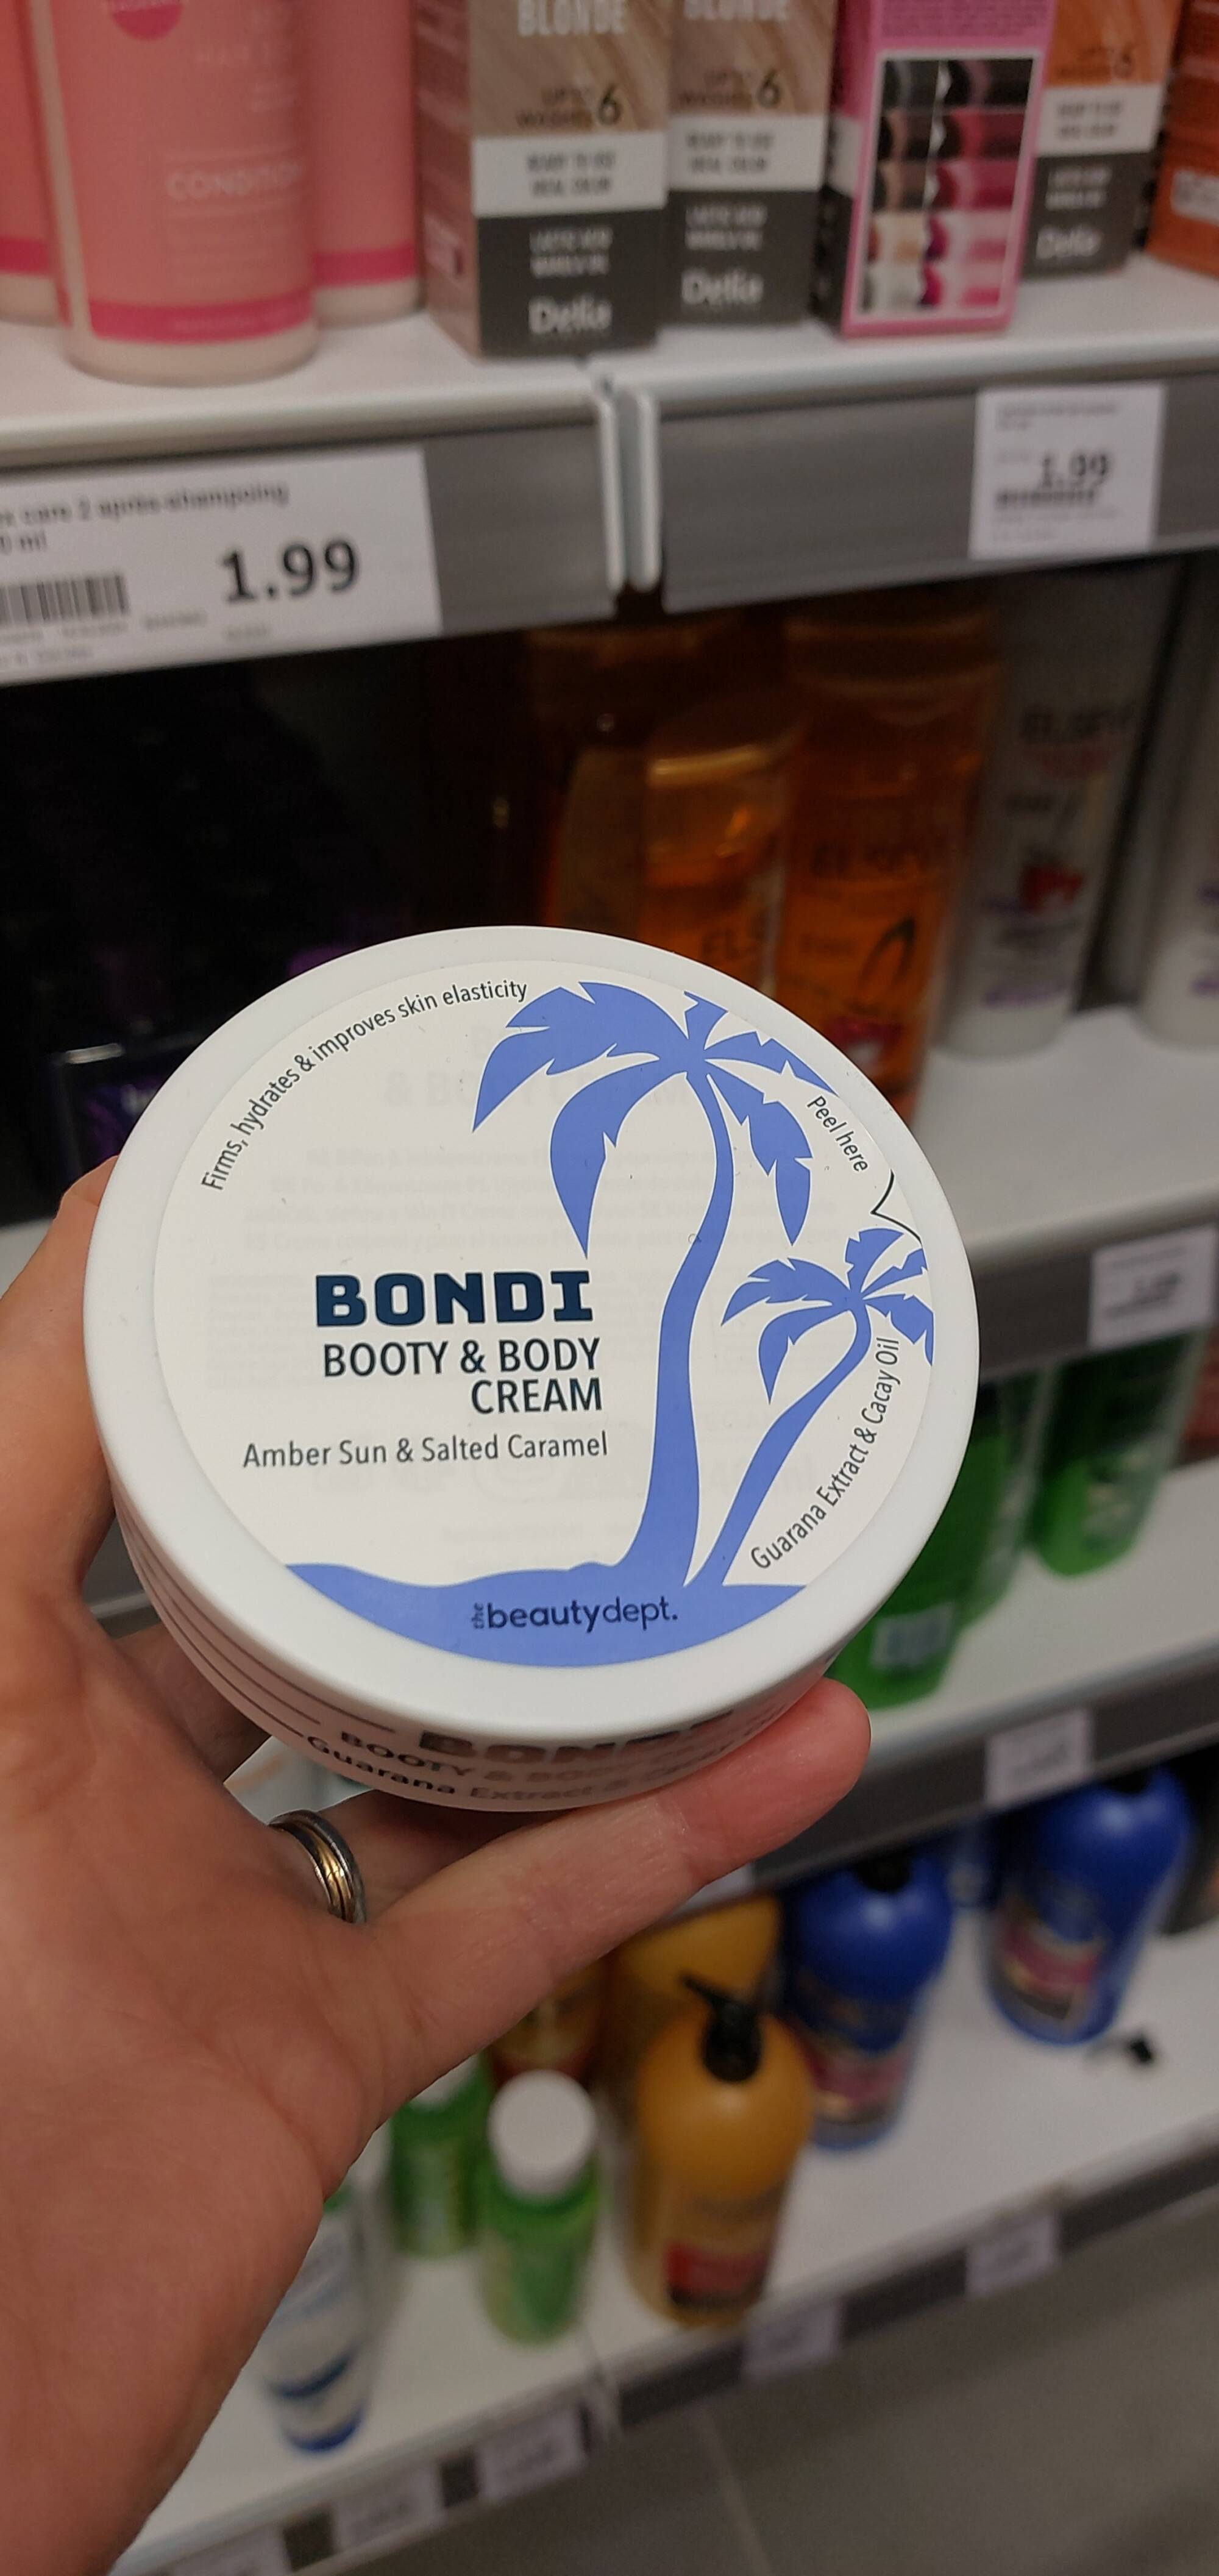 THE BEAUTY DEPT - Bondi - Booty & body cream